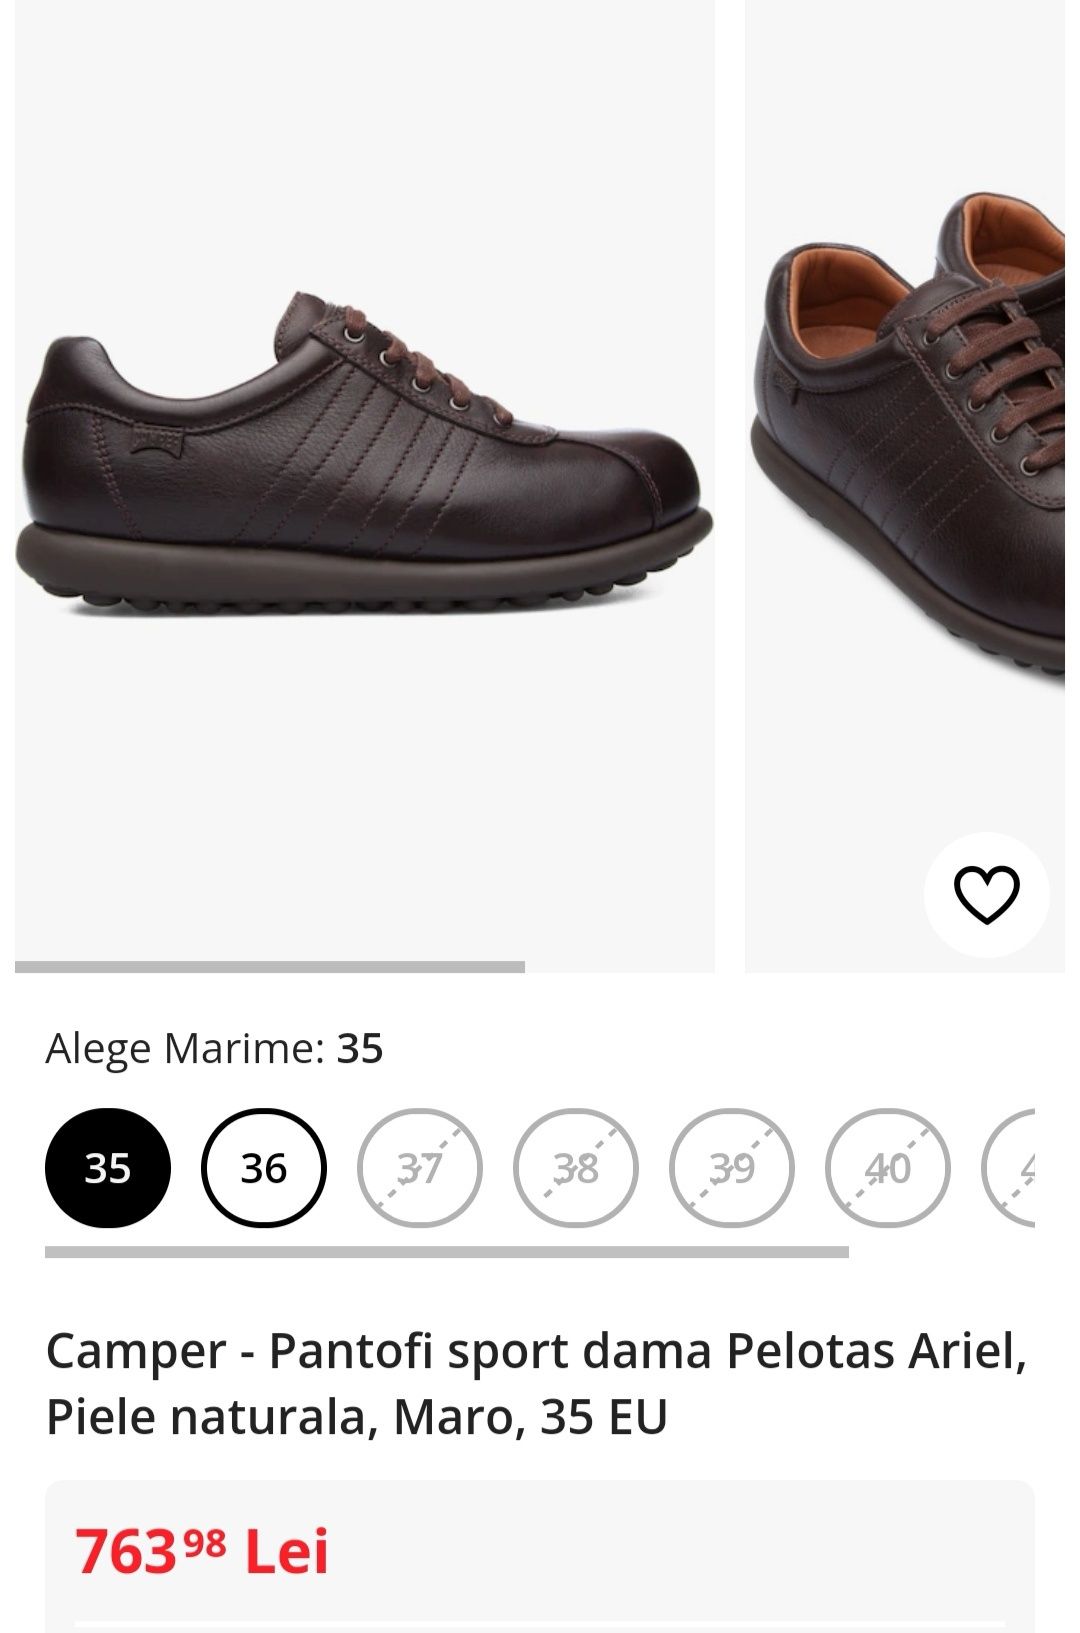 Pantofi/Adidași Camper Pelotas Ariel